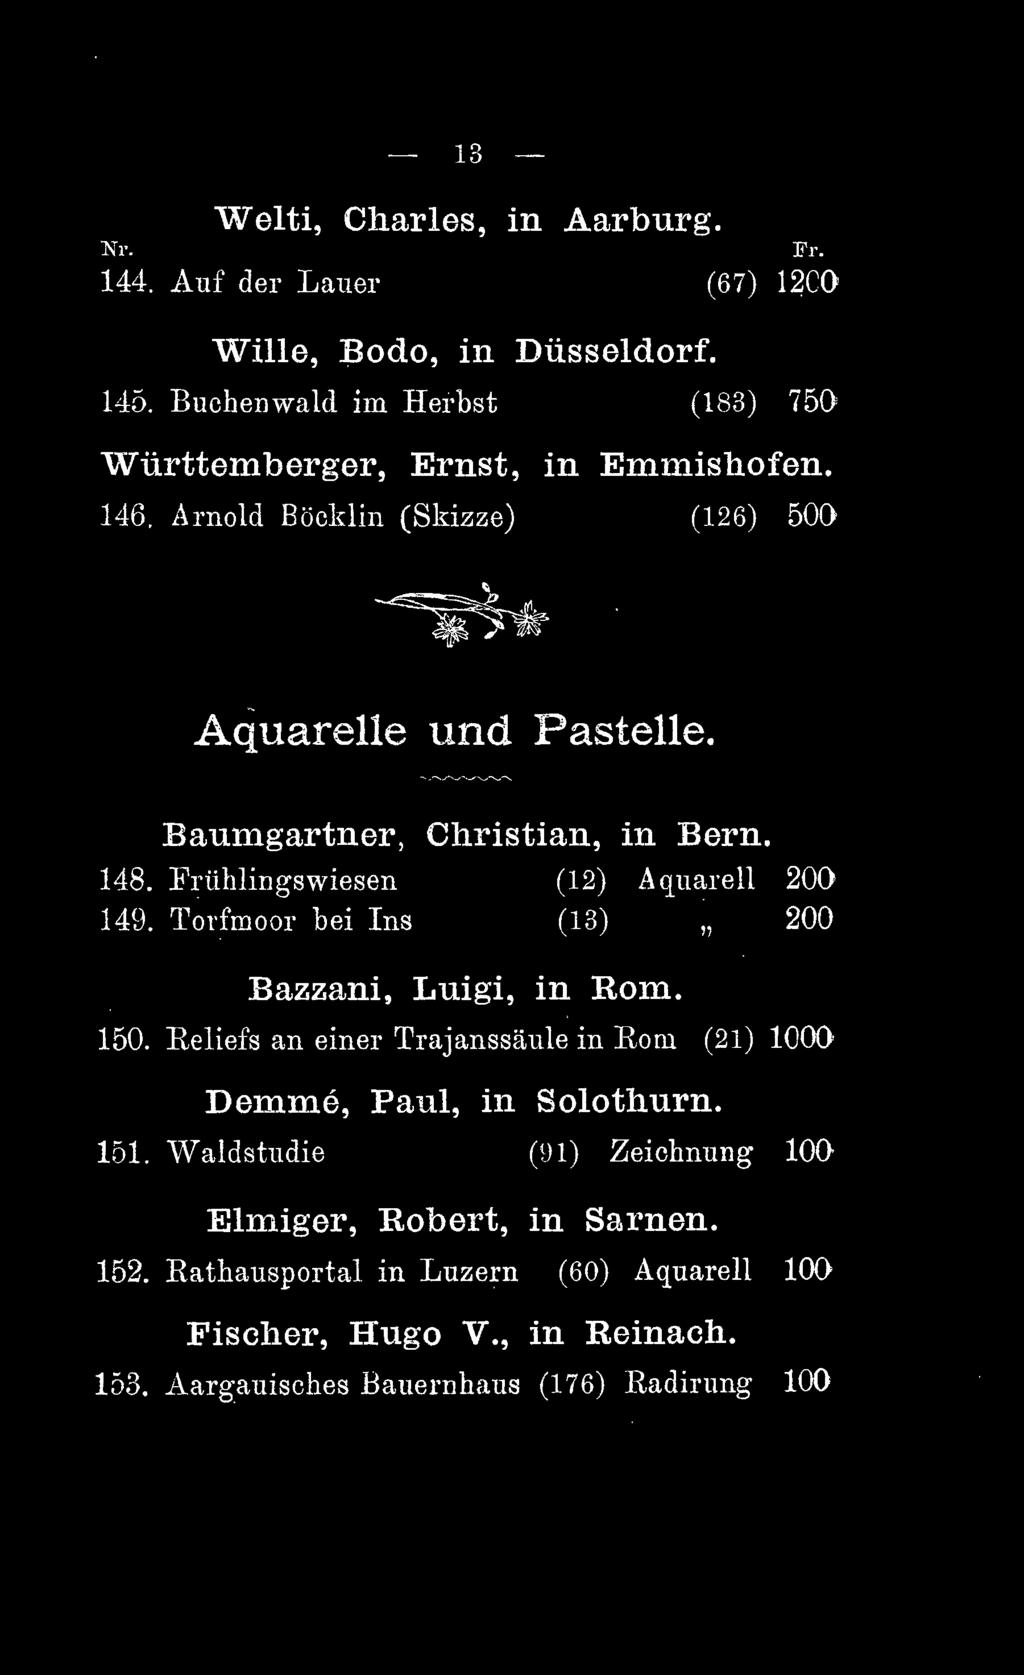 Baumgartner, Christian, in Bern. 148. Frühlingswiesen (12) Aquarell 200 149. Torfmoor bei Ins (13) 200 Bazzani, Luigi, in Rom. 150.